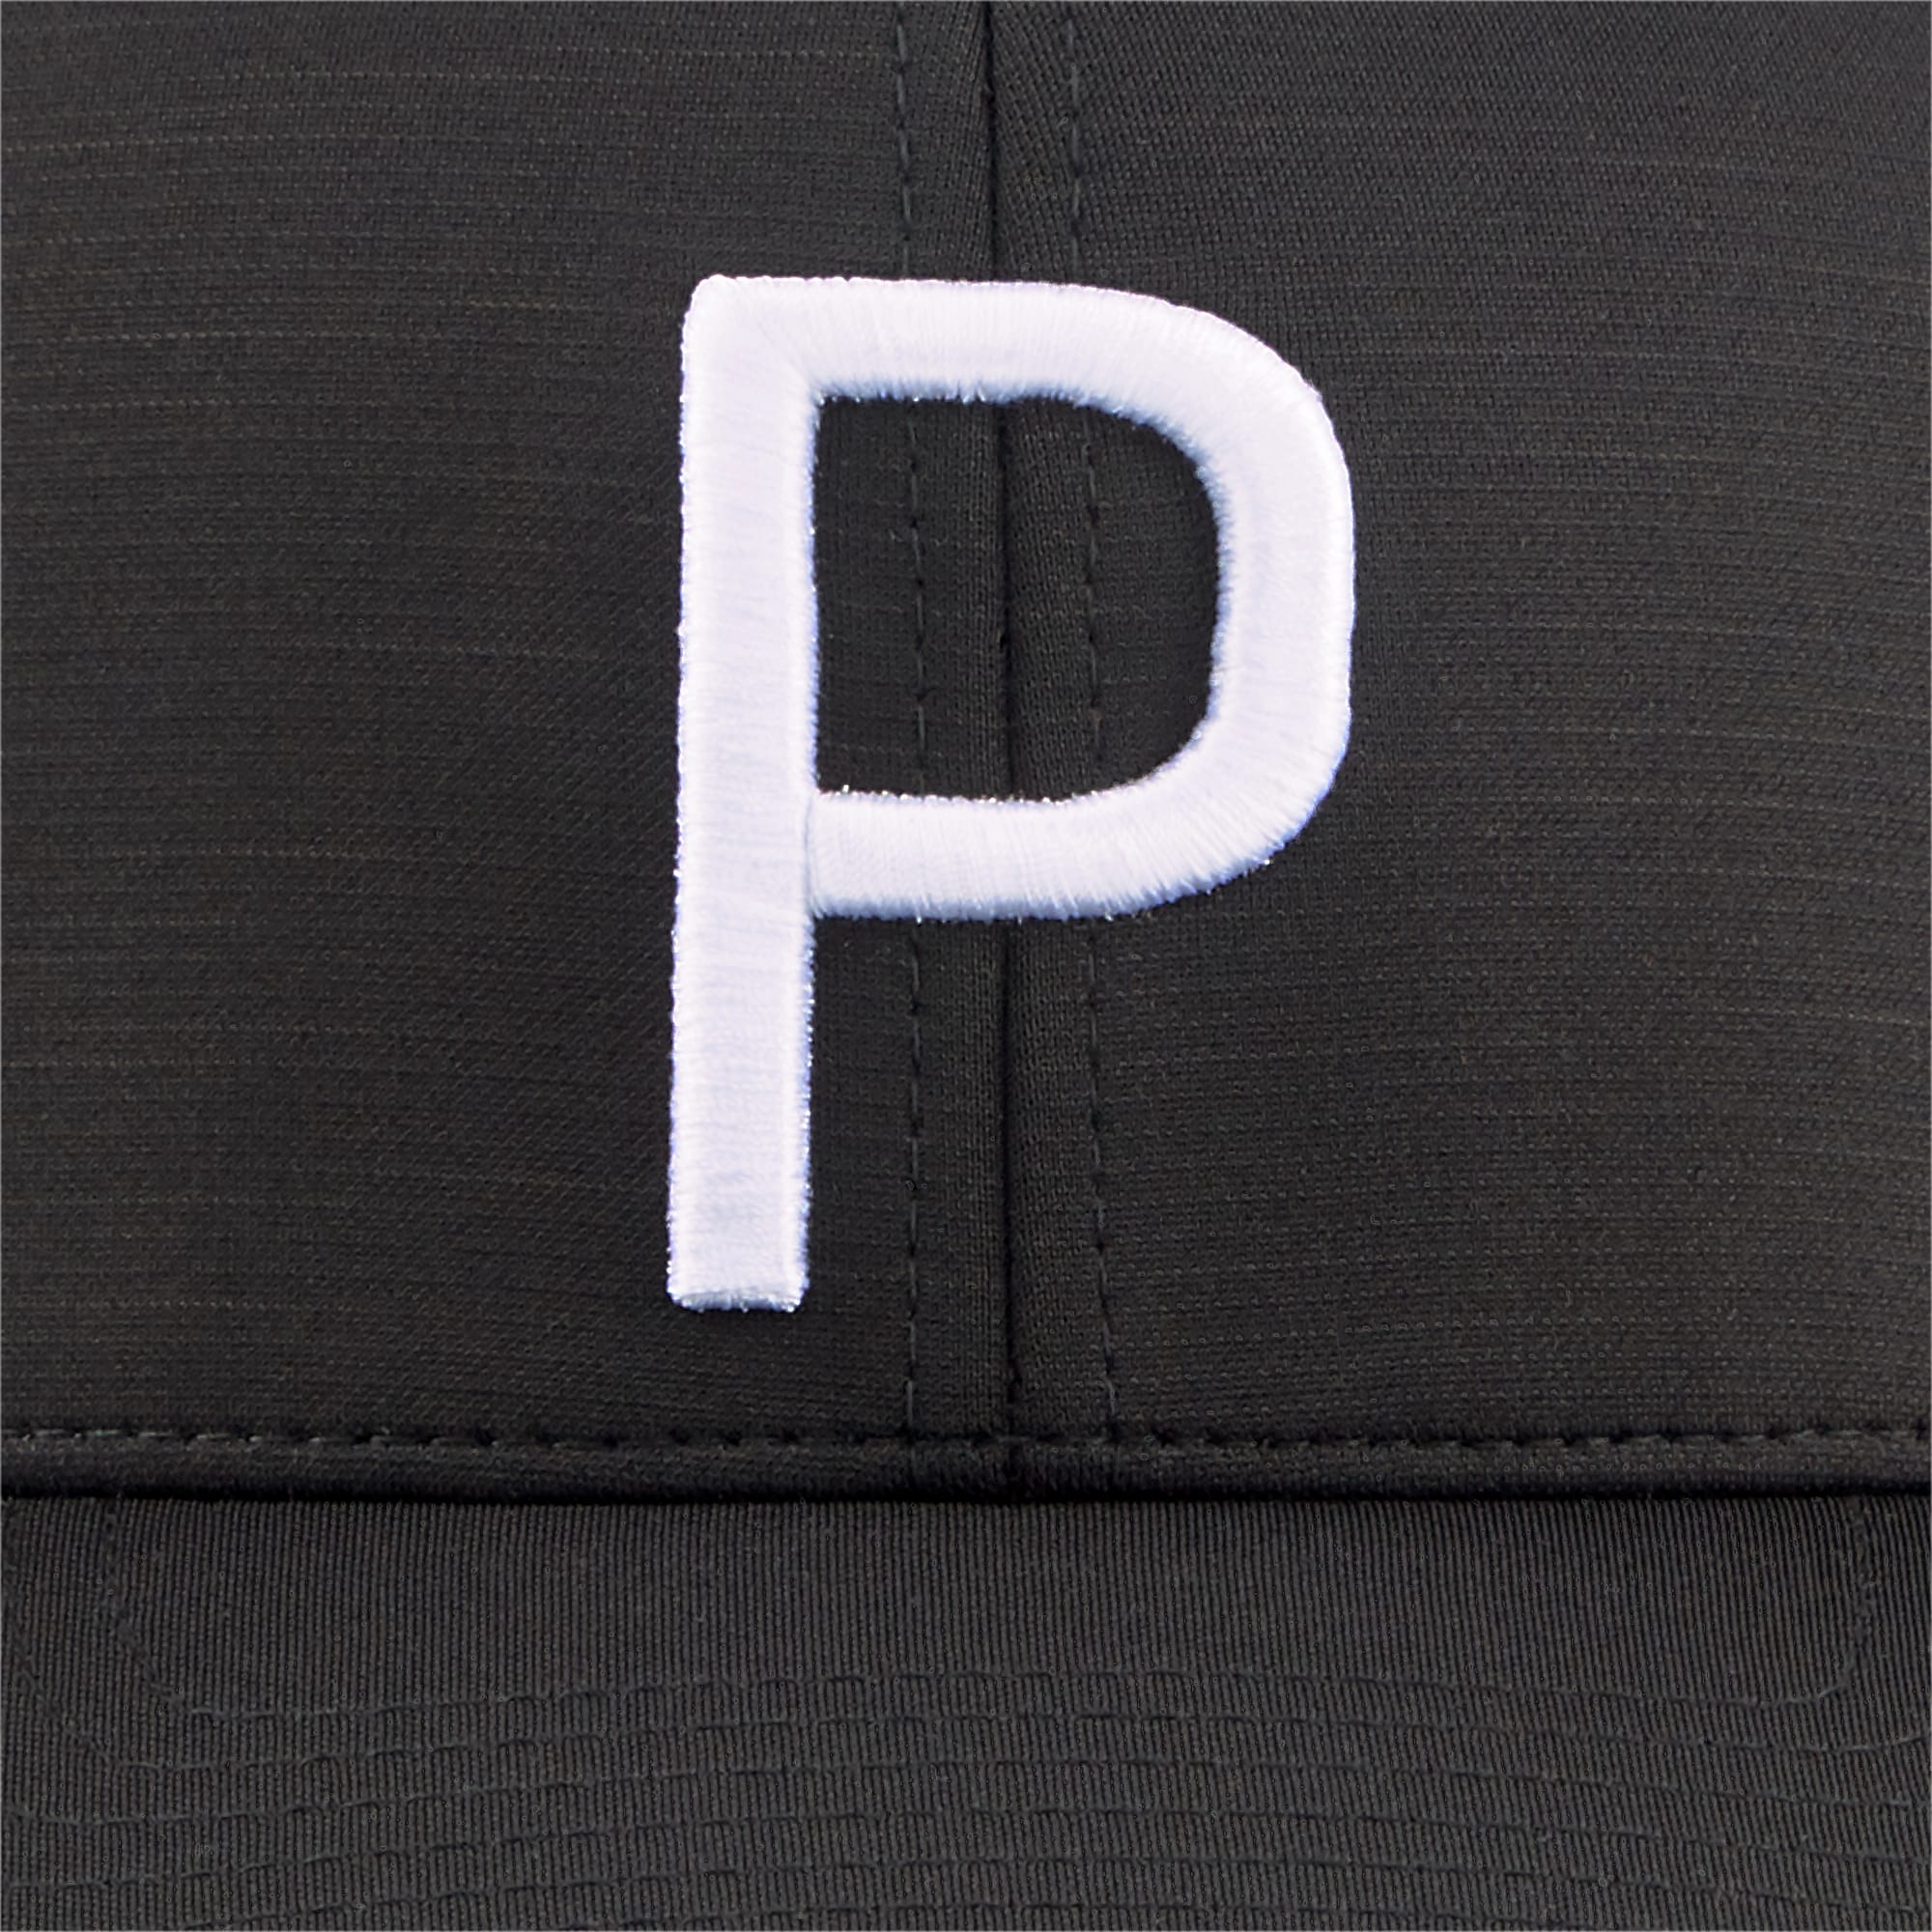 Men's PUMA P Golf Cap, Black/White Glow, Accessories